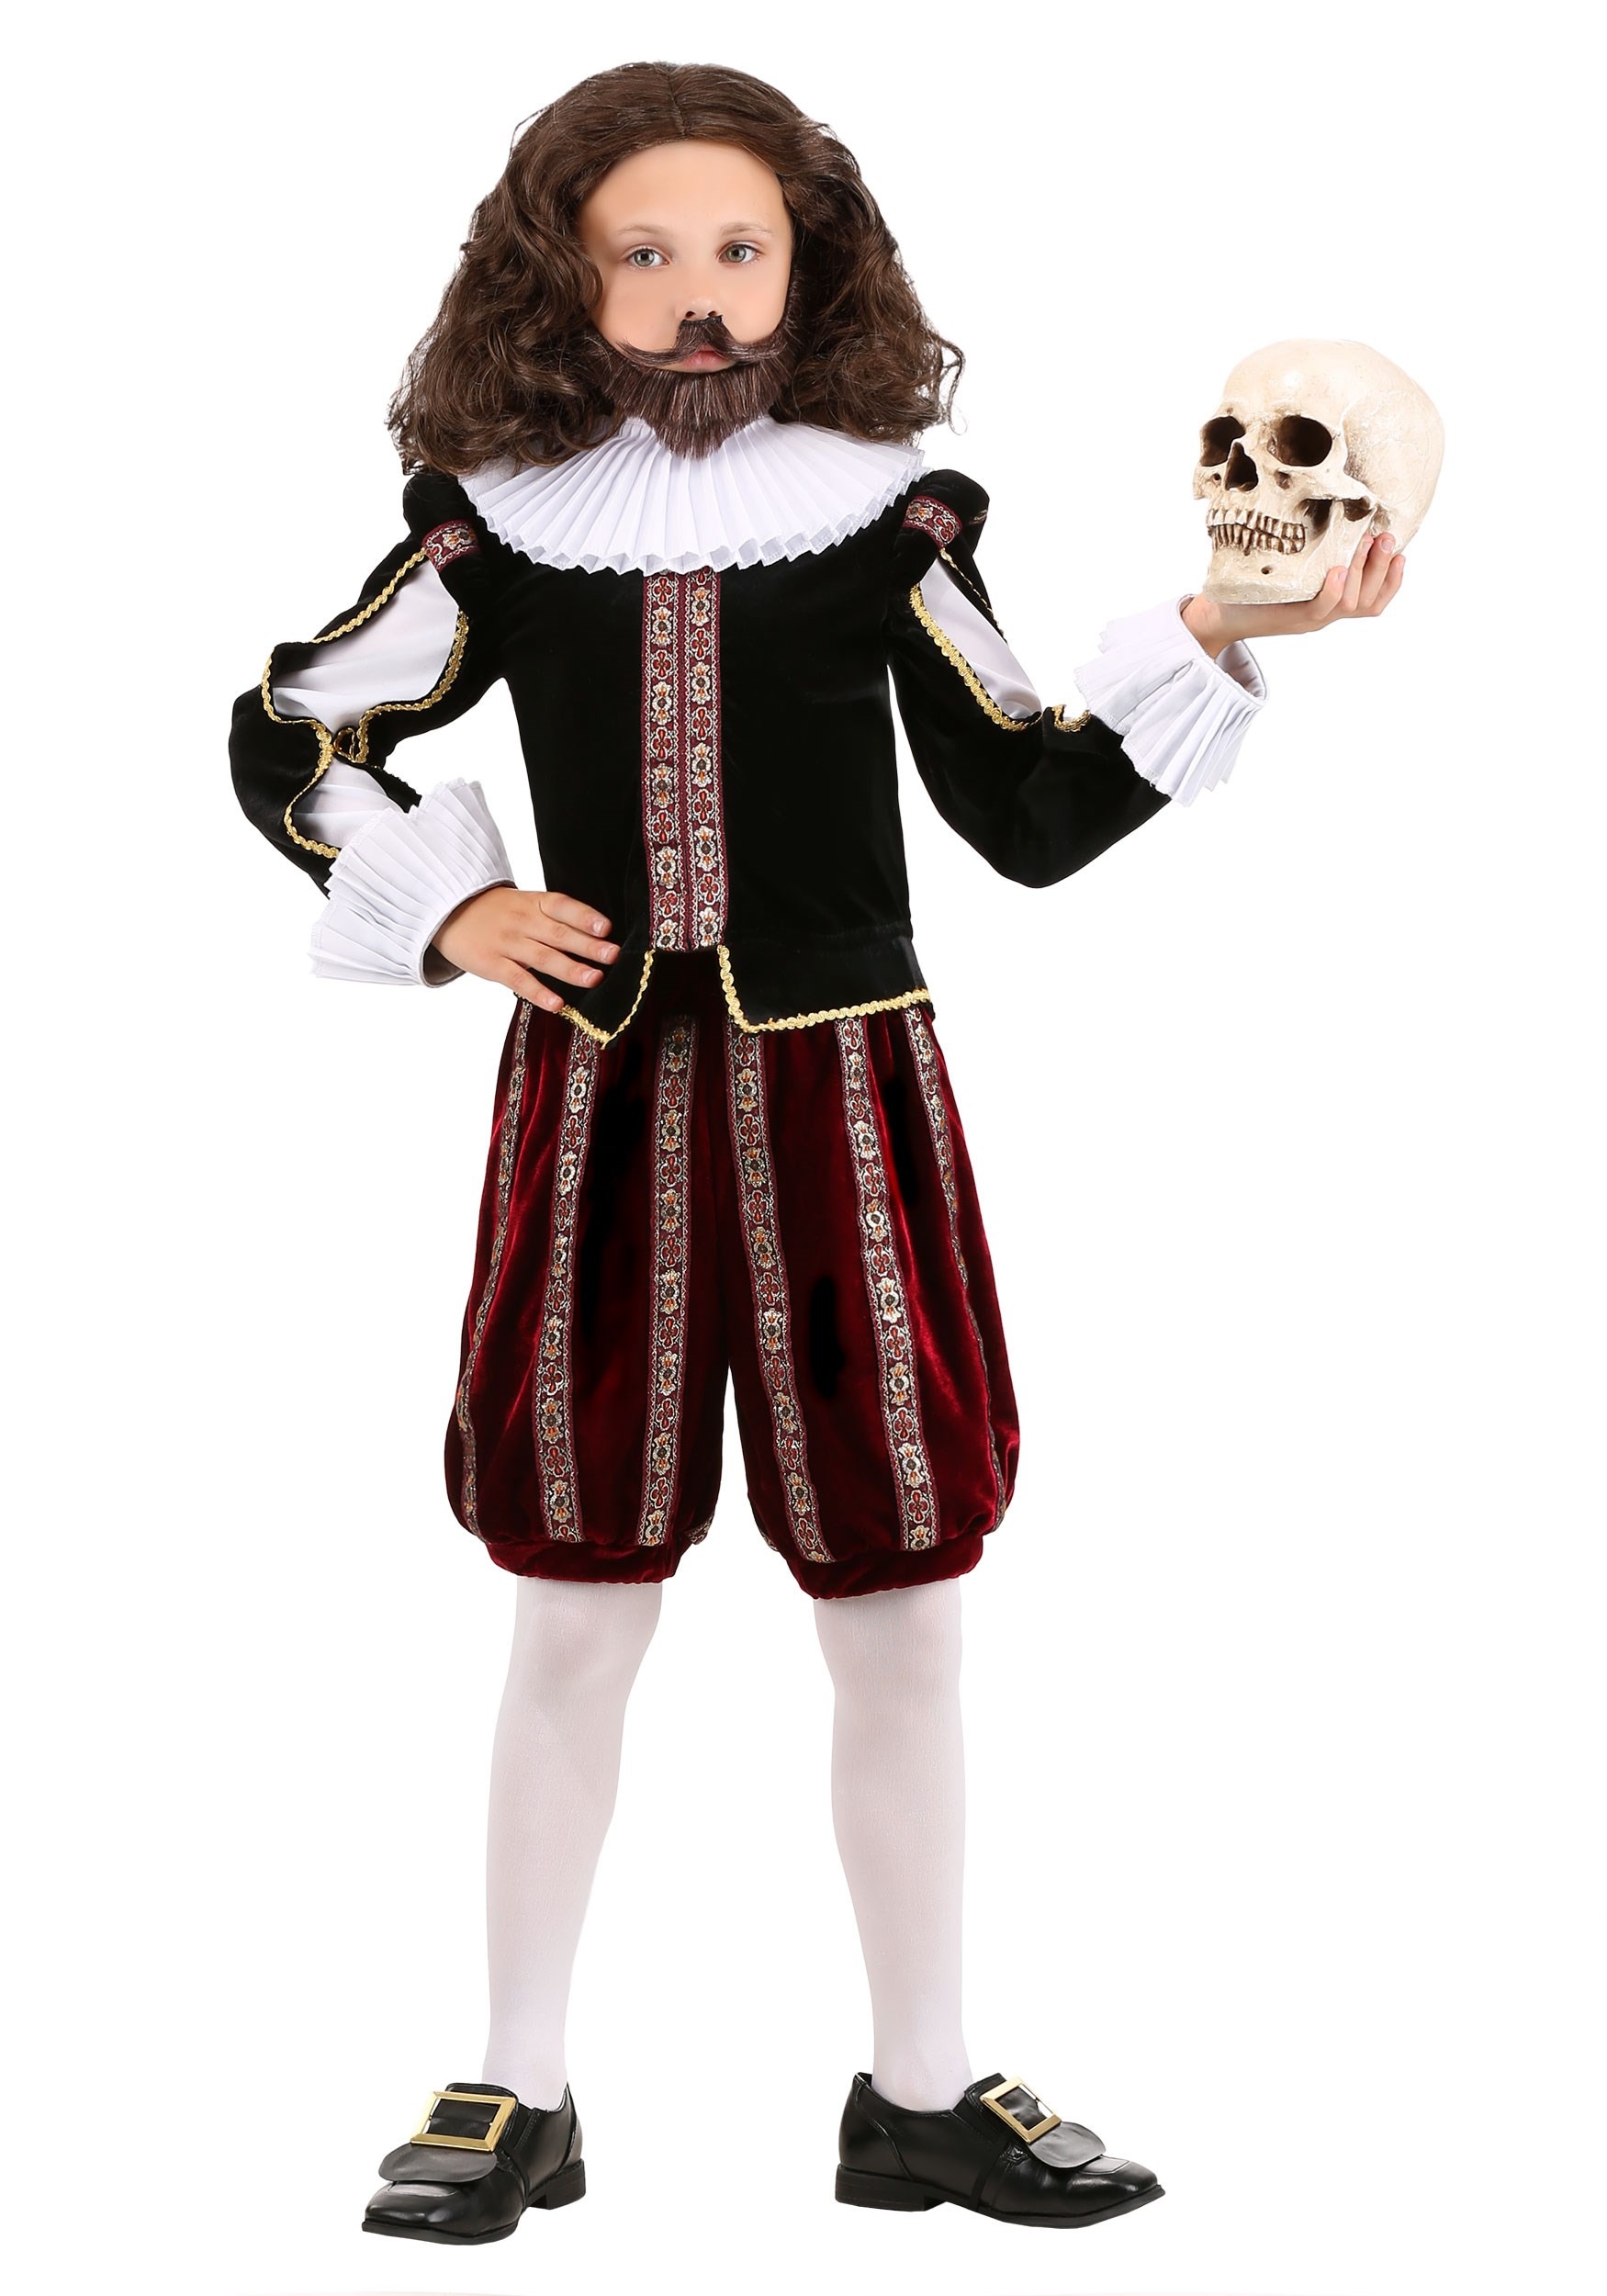 William Shakespeare Costume for Boys